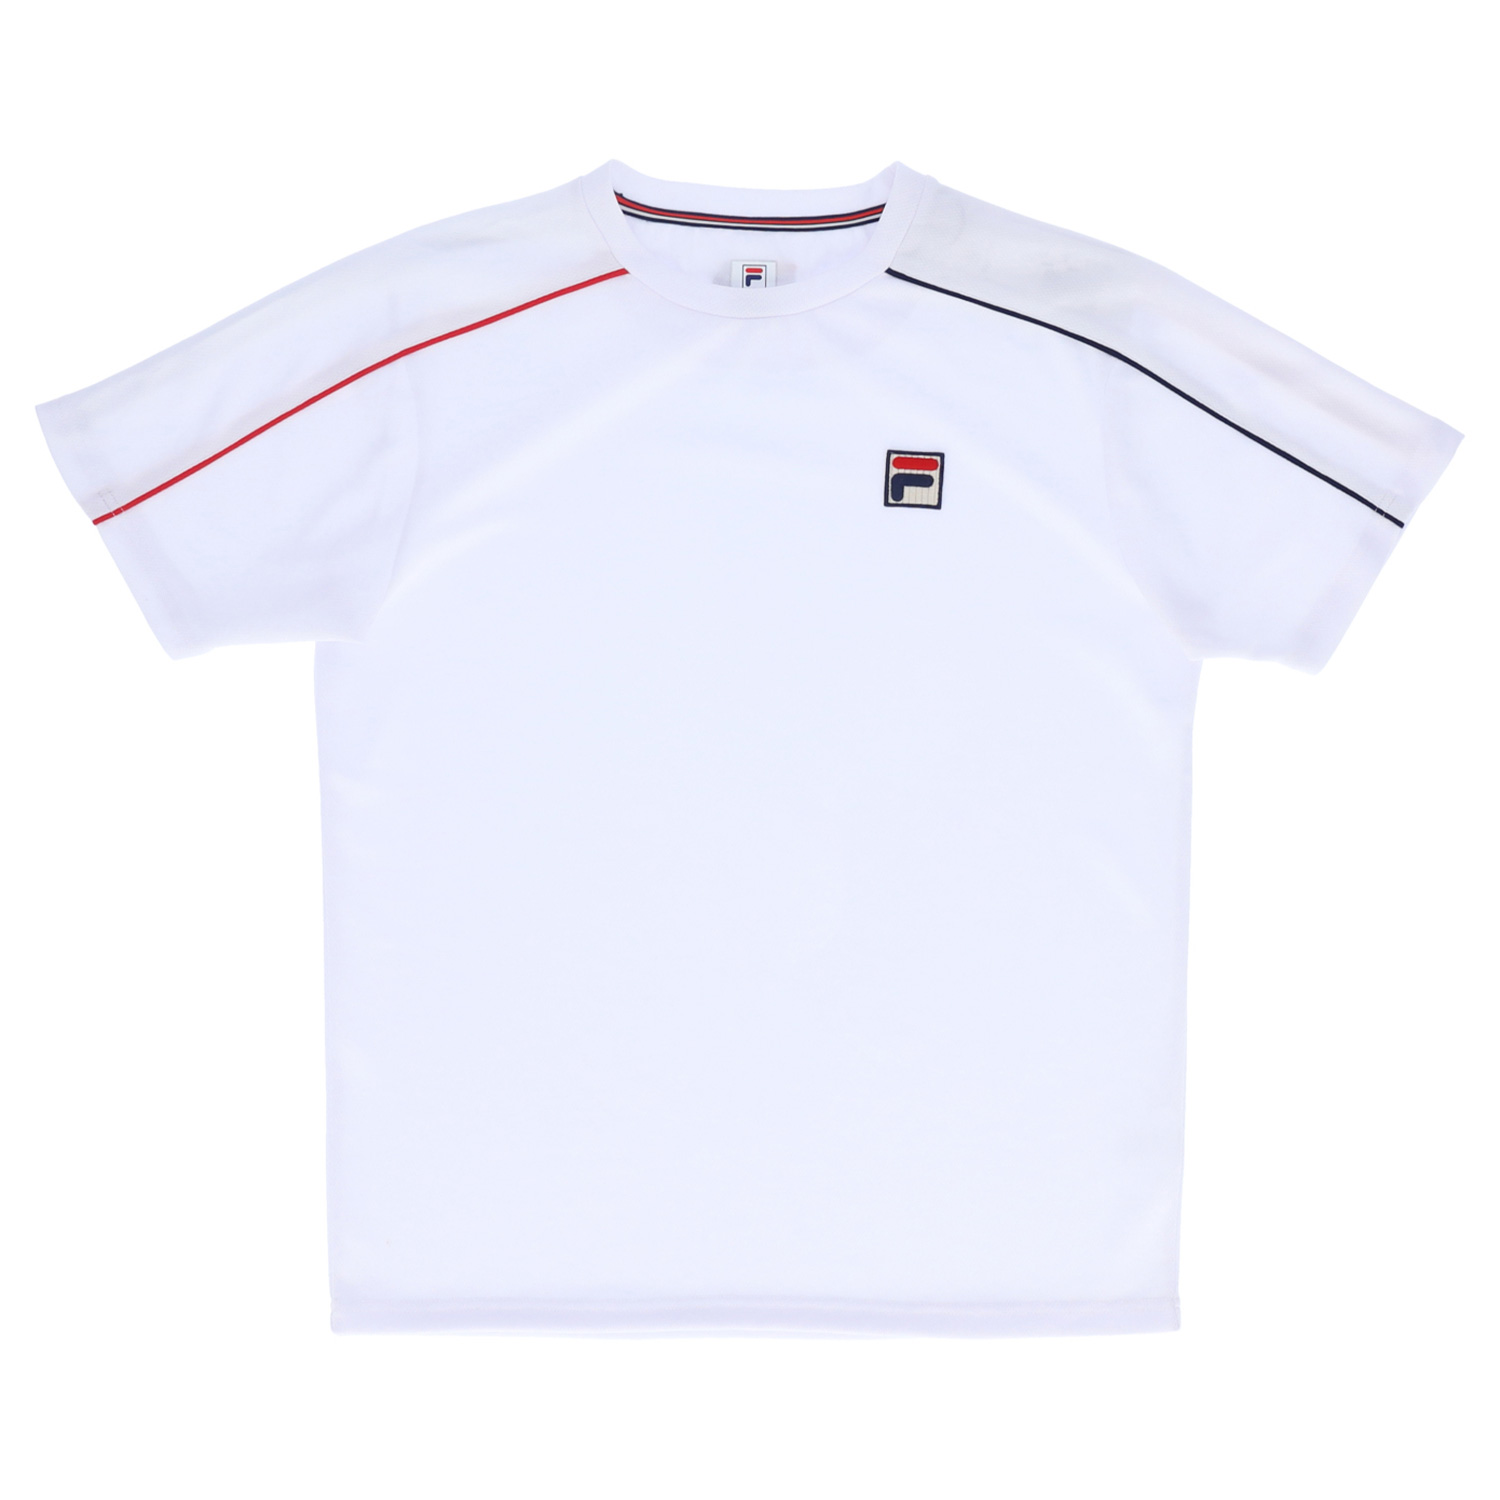 Archid T-Shirt white